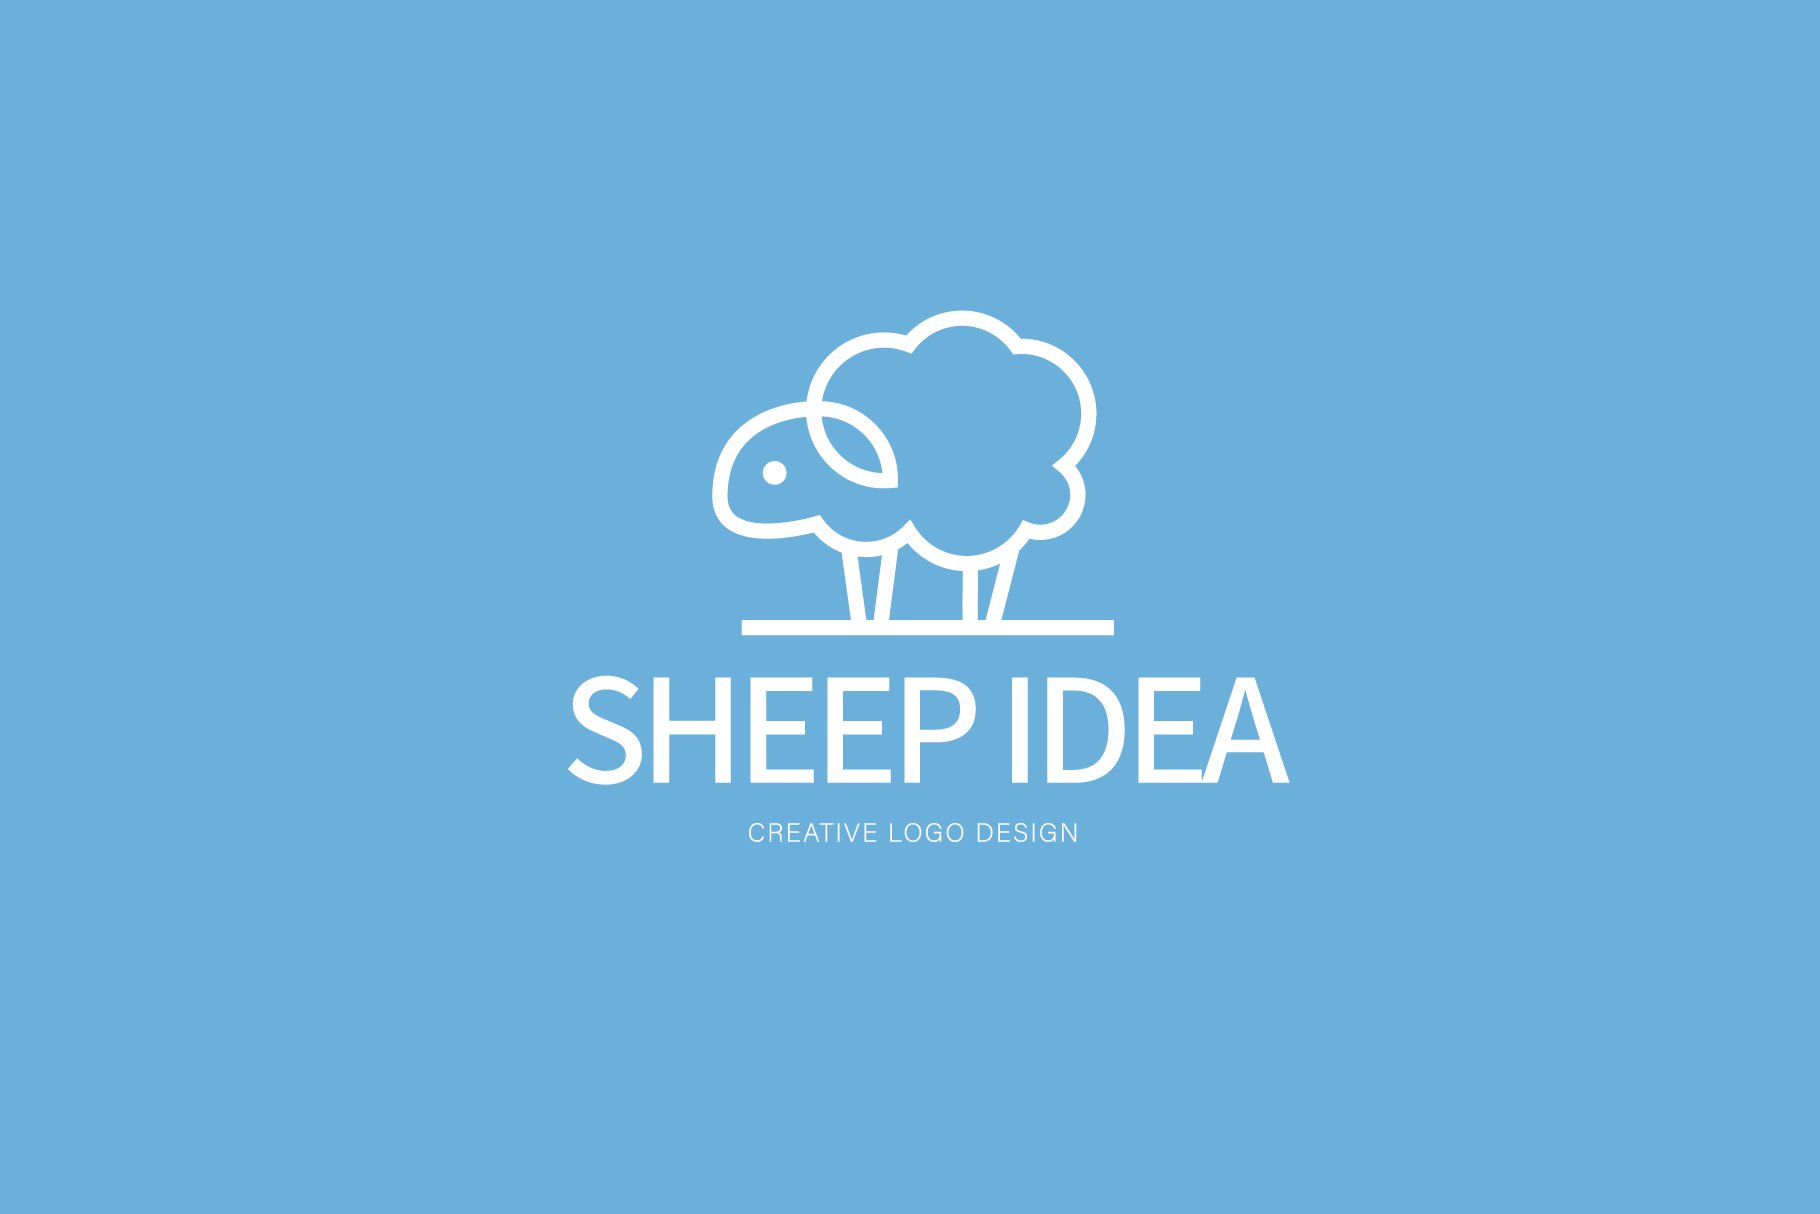 sheep logo preview image.